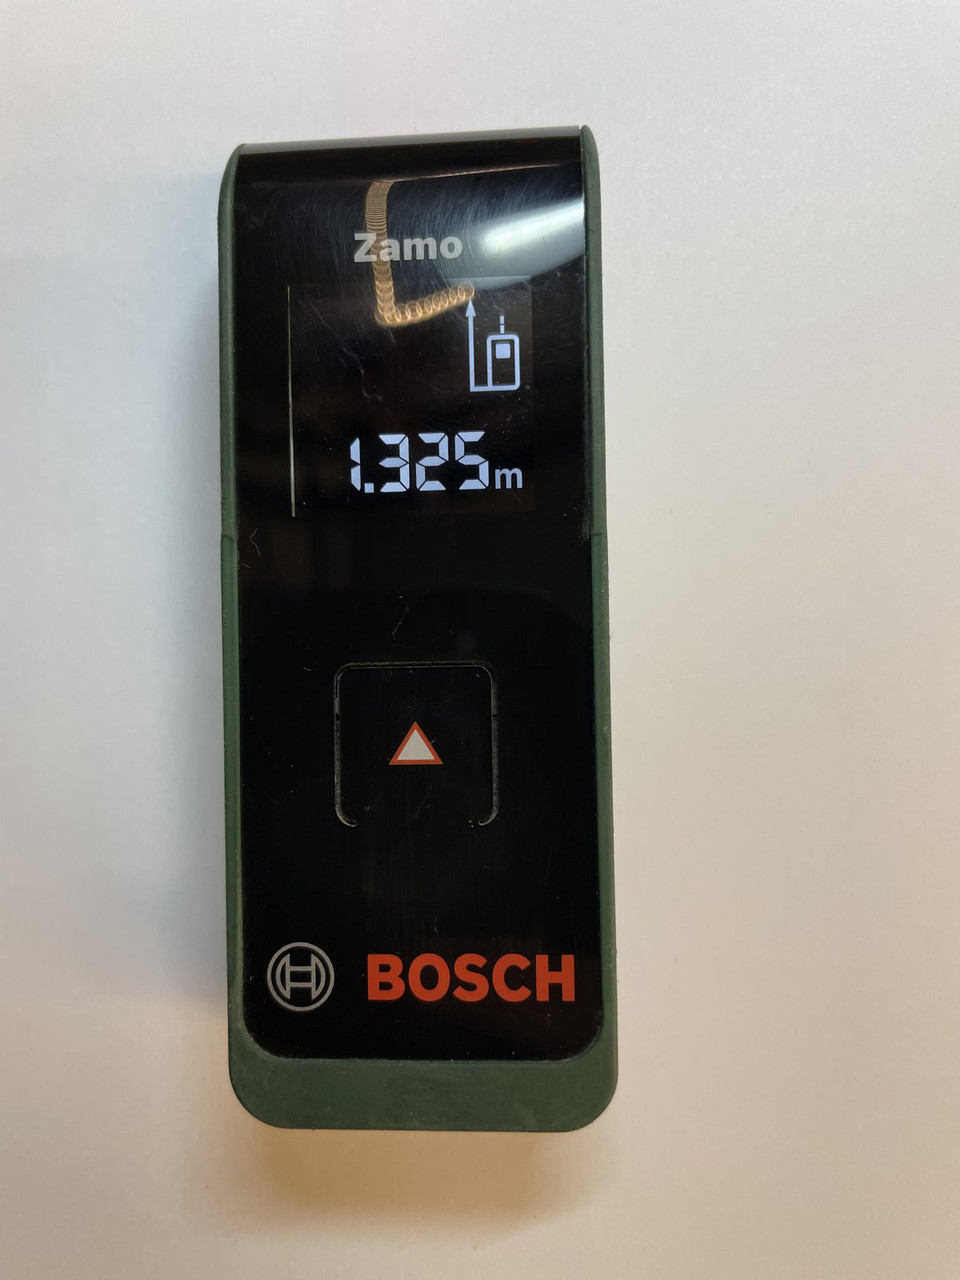 Bosch ZAMO Laser Measure Nov 2018 